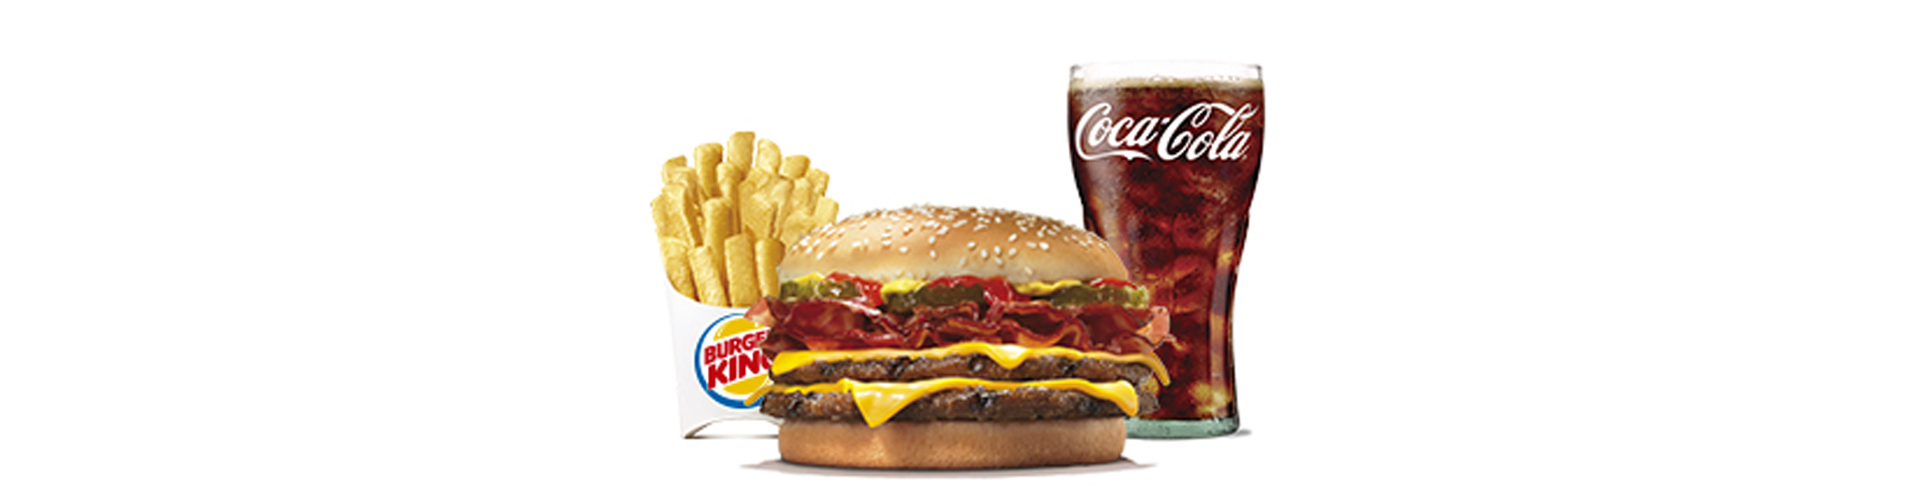 menu-doble-cheese-bacon-burgerking-40001718-sprite-aros